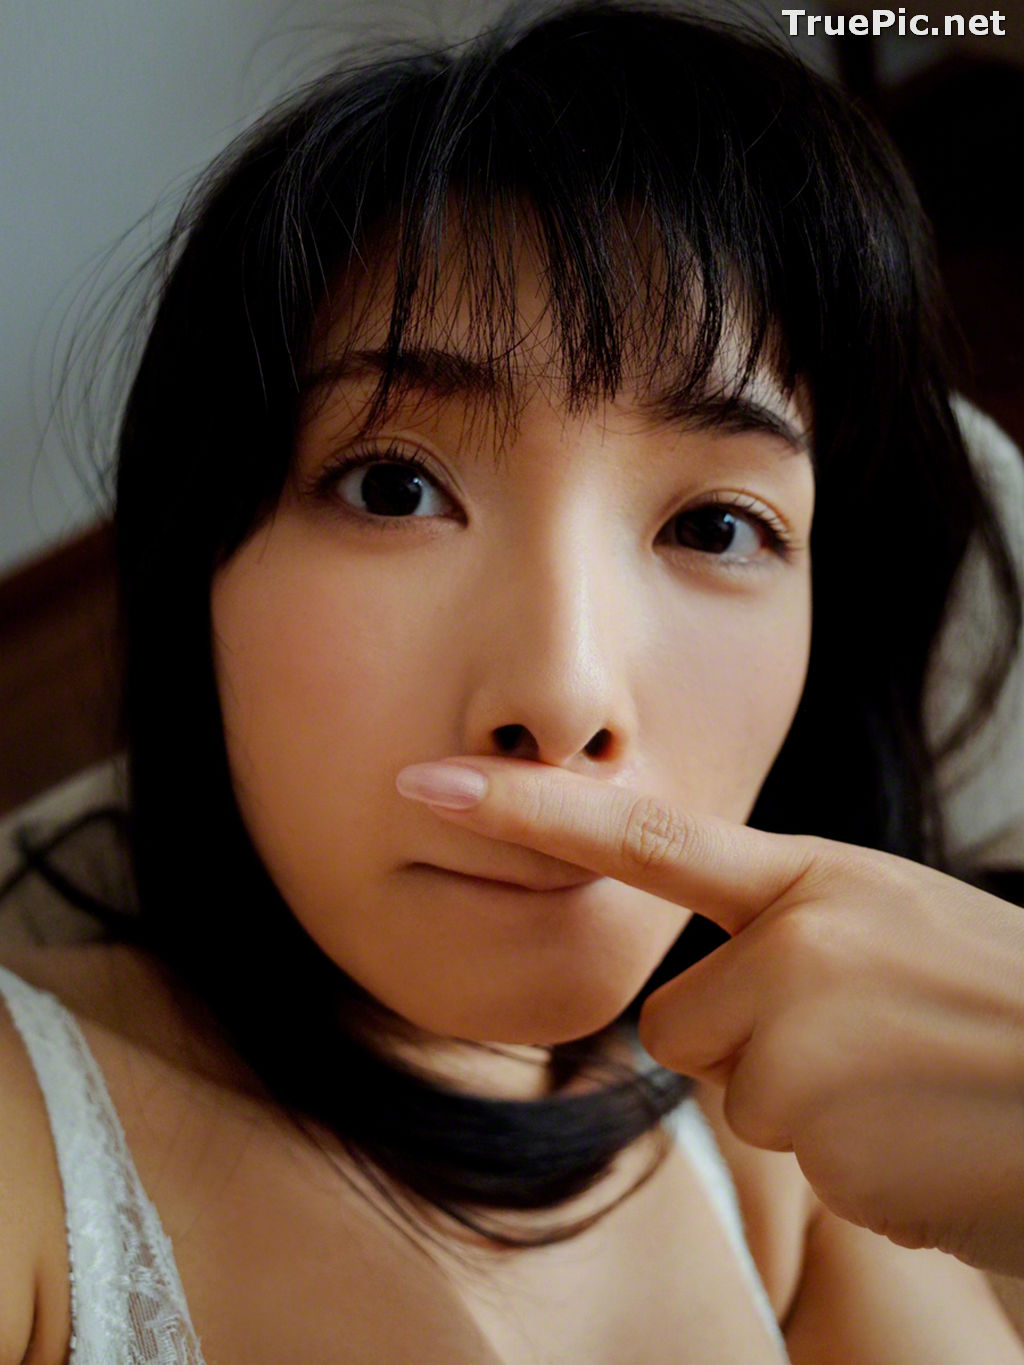 Image Wanibooks No.137 – Japanese Idol Singer and Actress – Erika Tonooka - TruePic.net - Picture-209